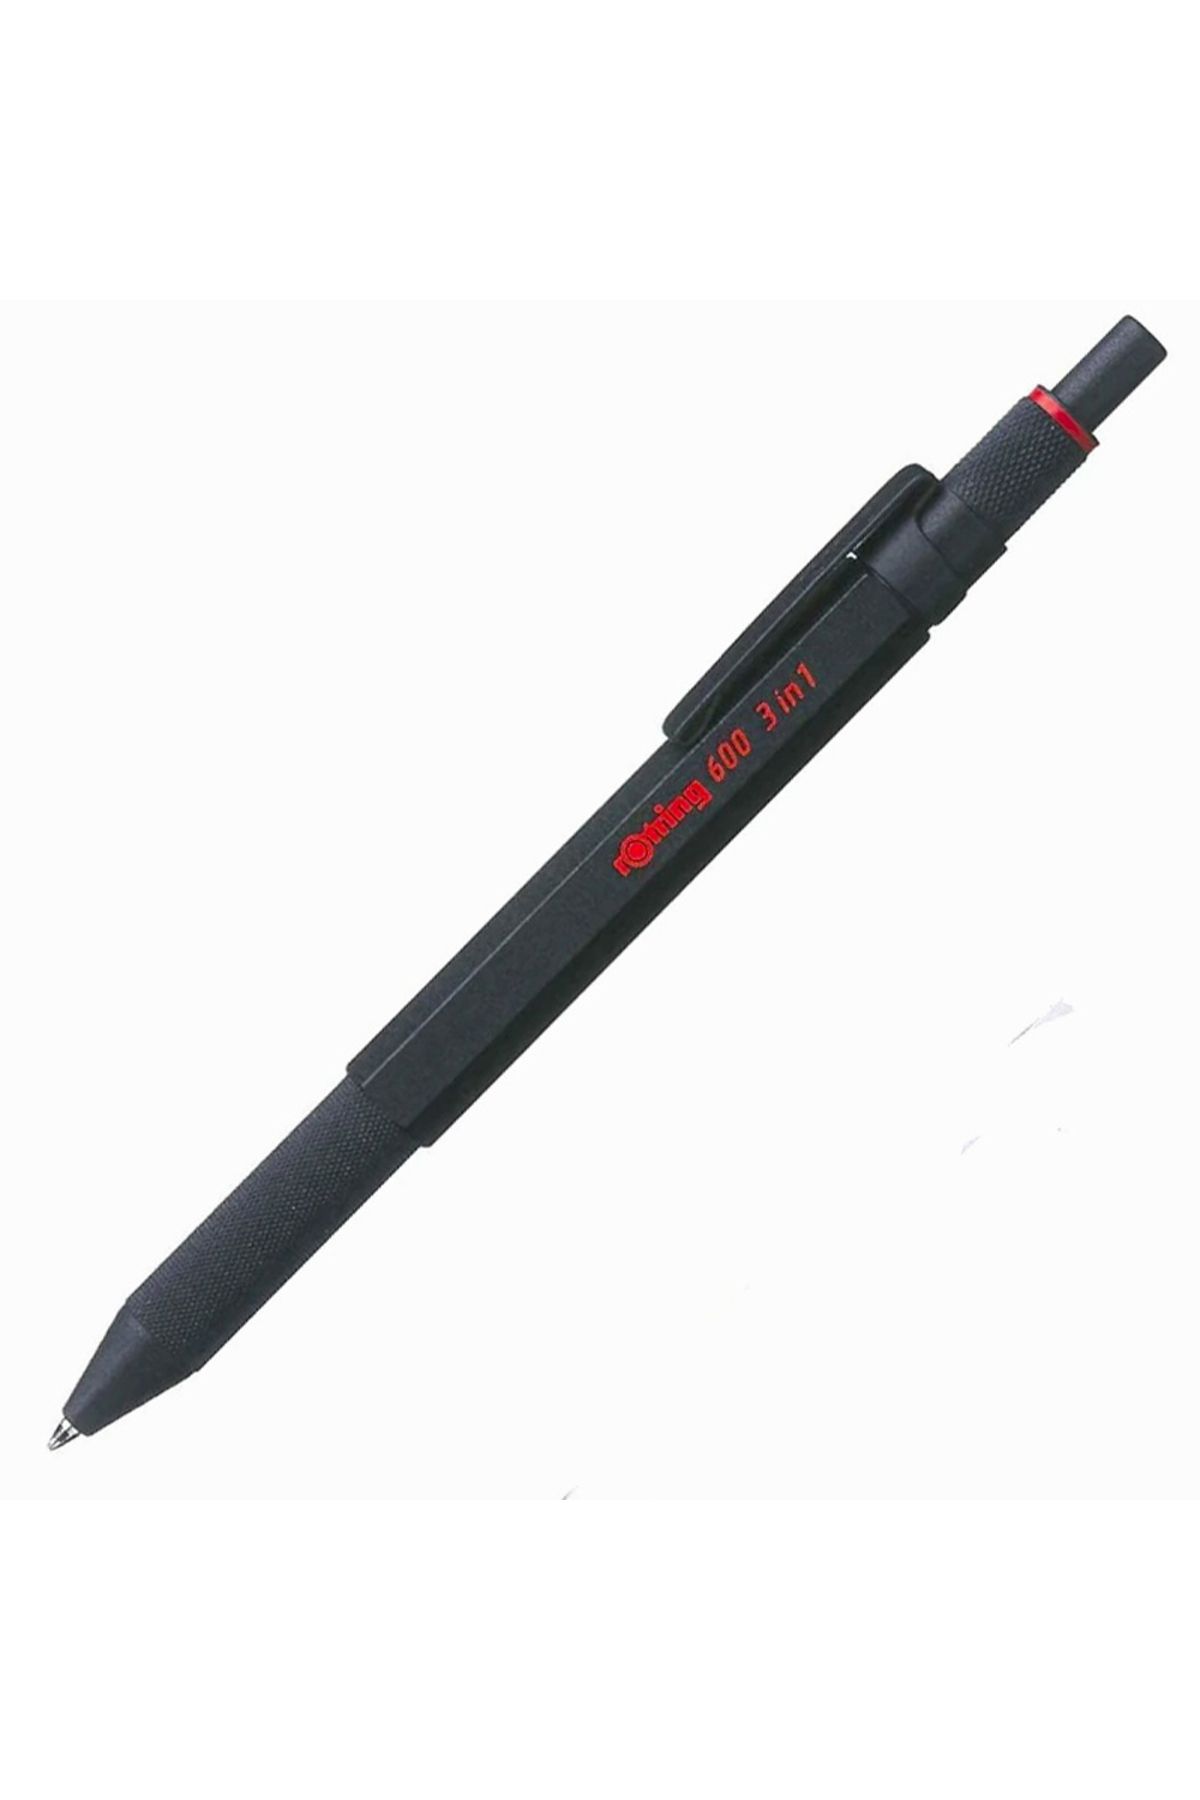 Rotring Multipen Üç Fonksiyonlu Kalem Siyah 600